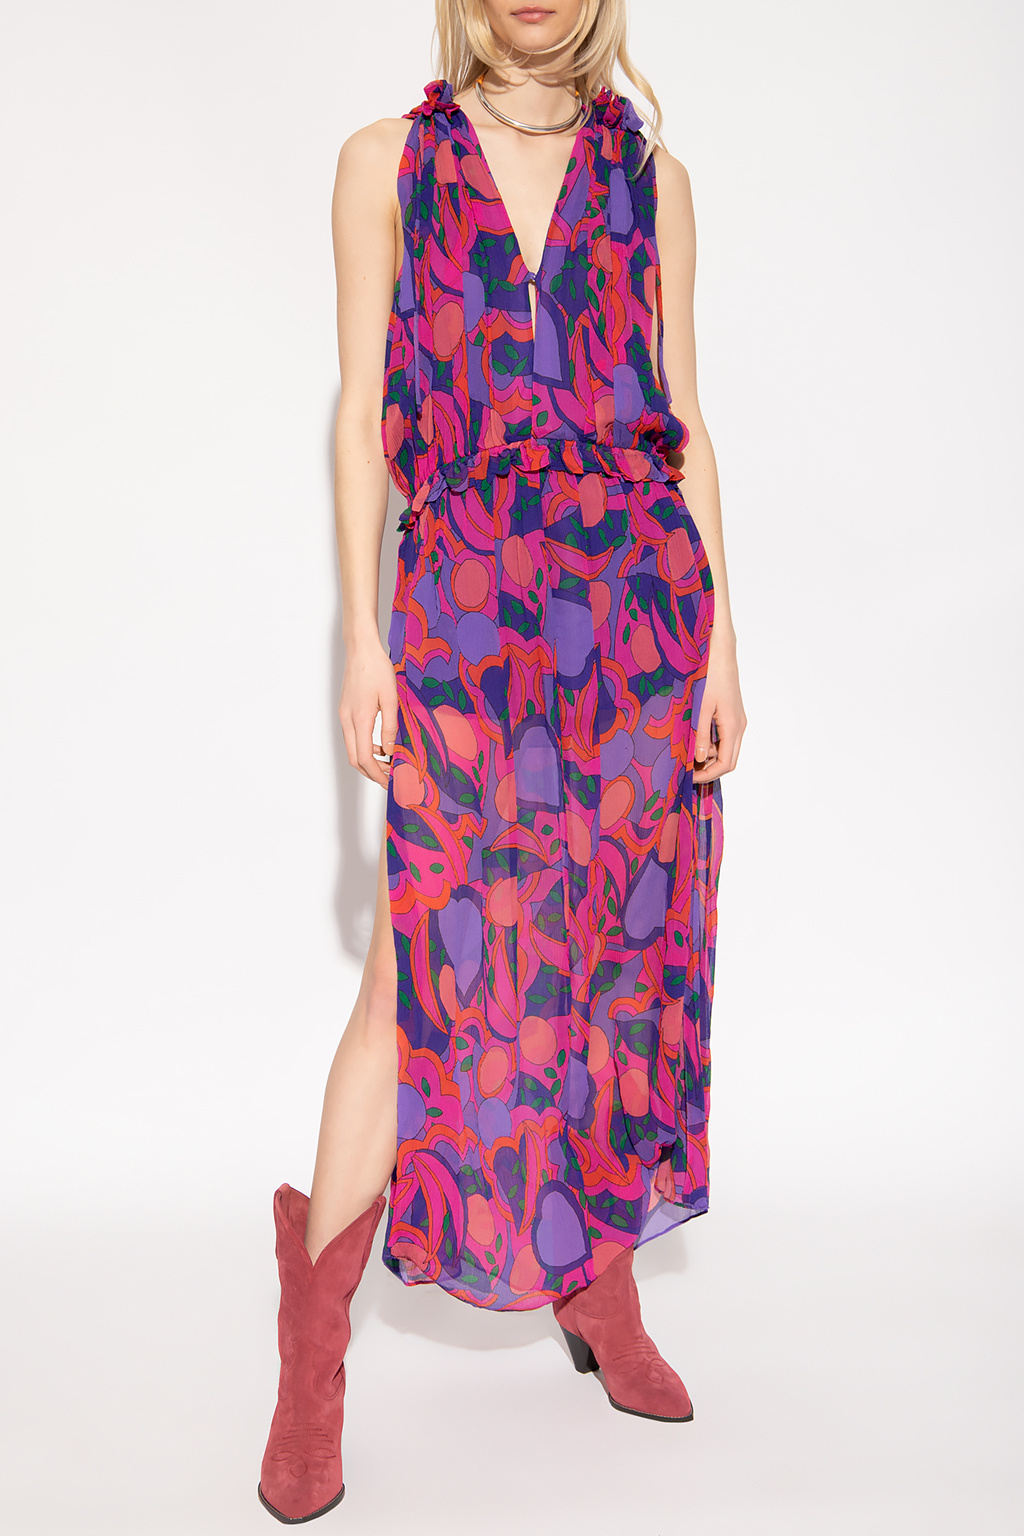 Isabel Marant ‘Alsaw’ patterned Farm dress